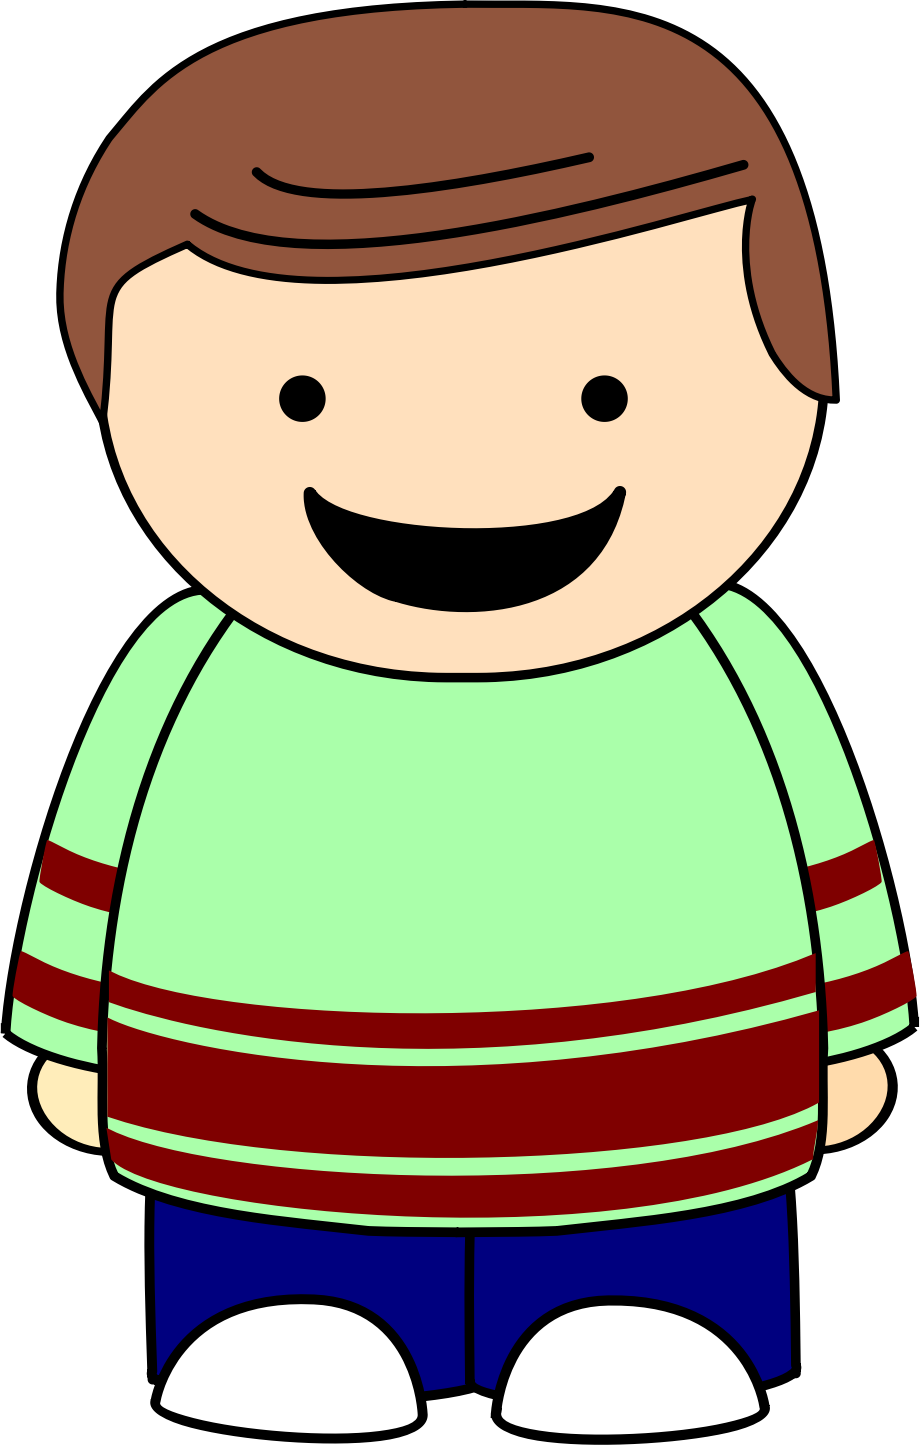 Smiling Cartoon Character Illustration PNG